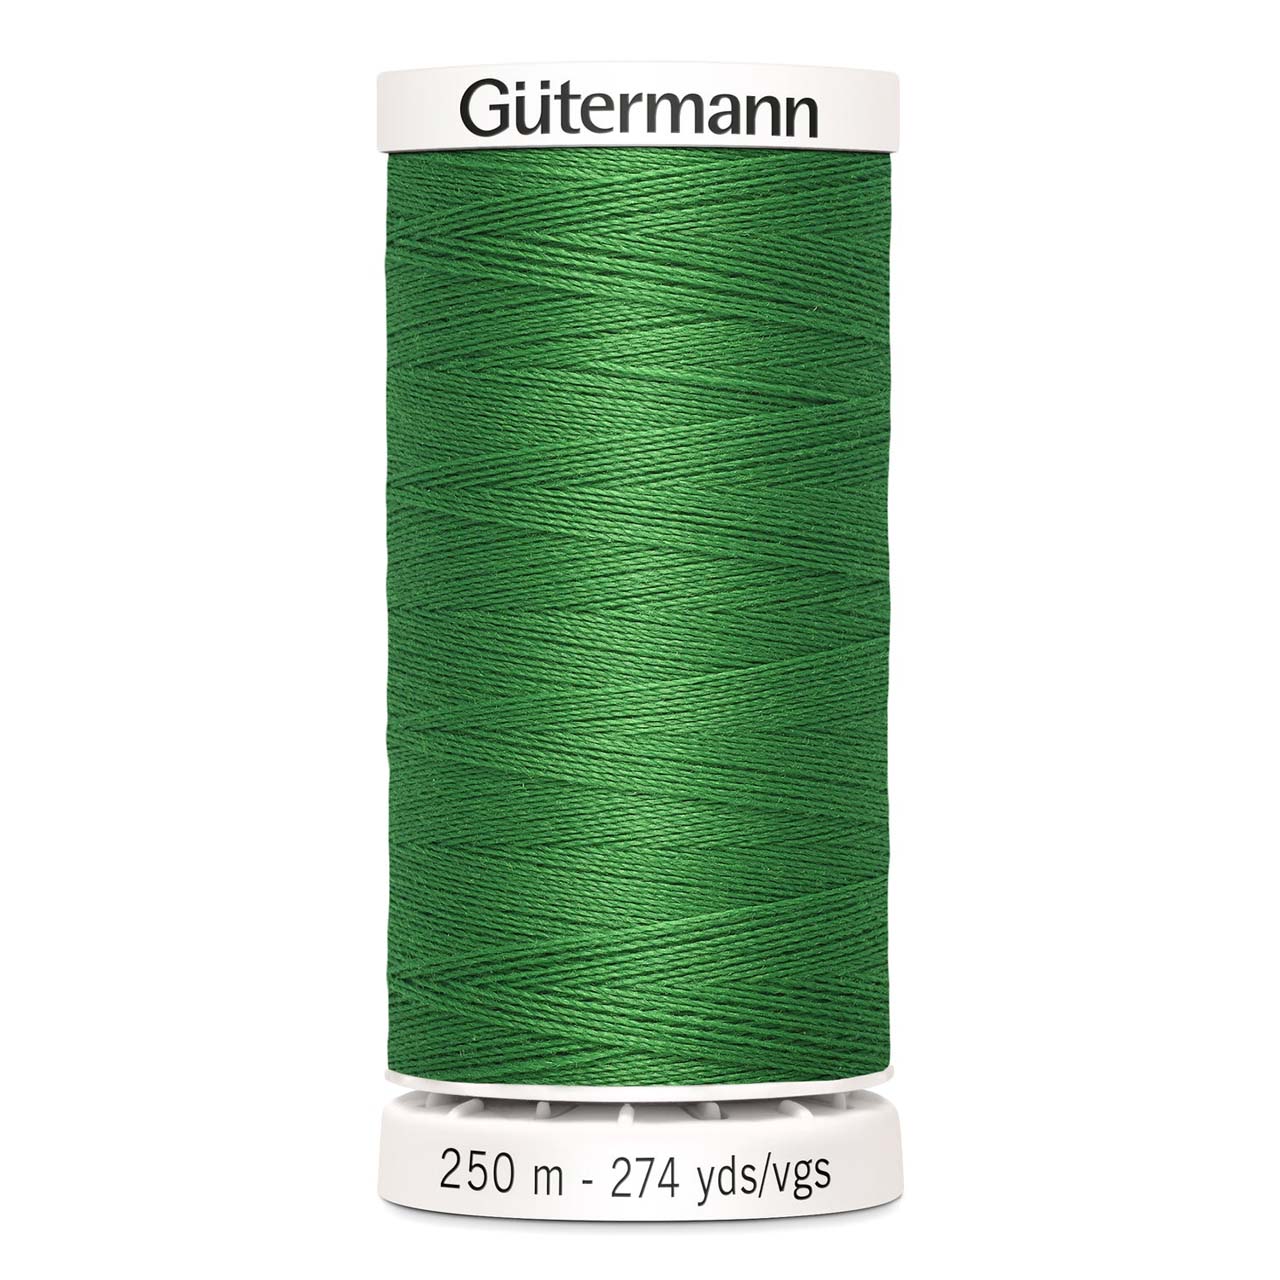 Gutermann thread 396 sewing thread 250 metres